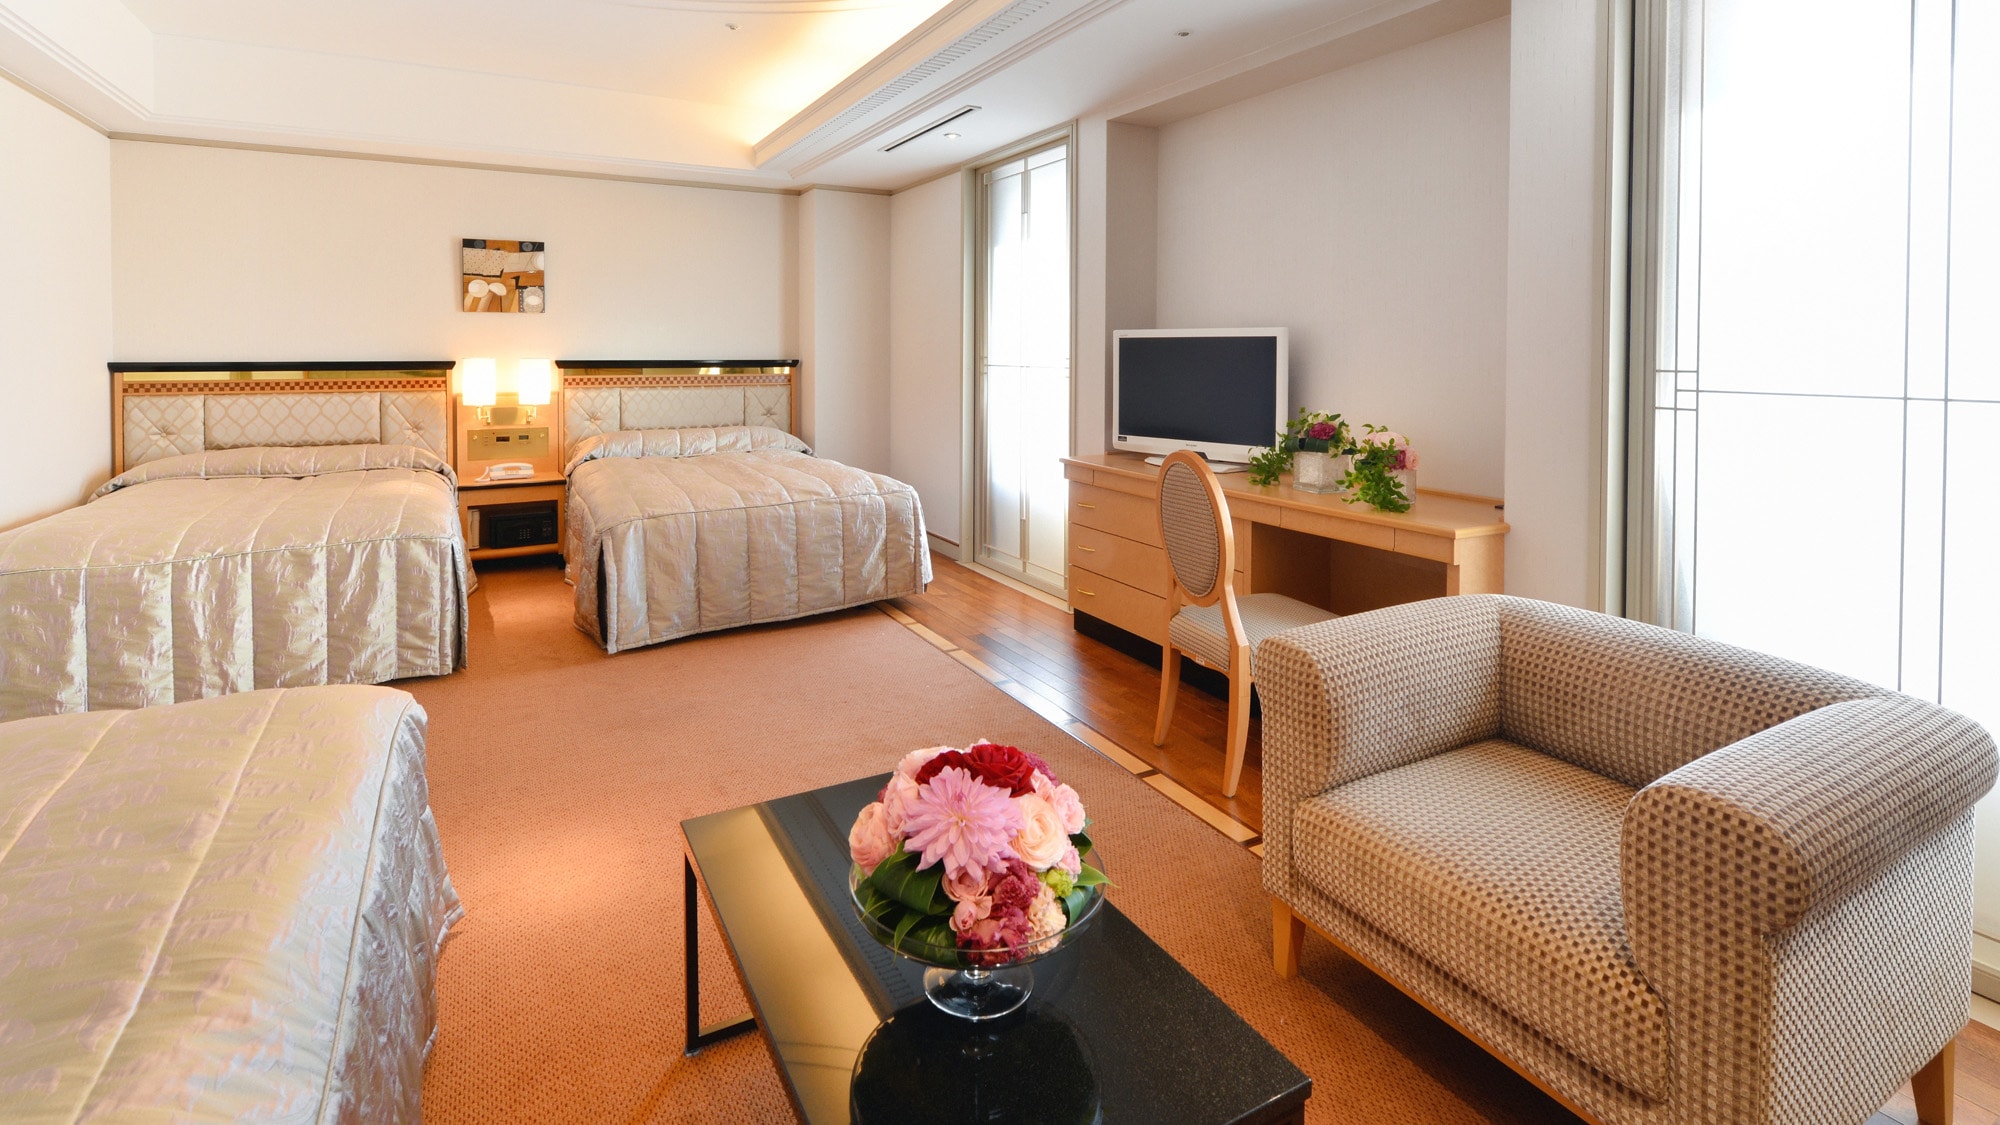 ◆ Rokko Suite Room [52.5 square meters]